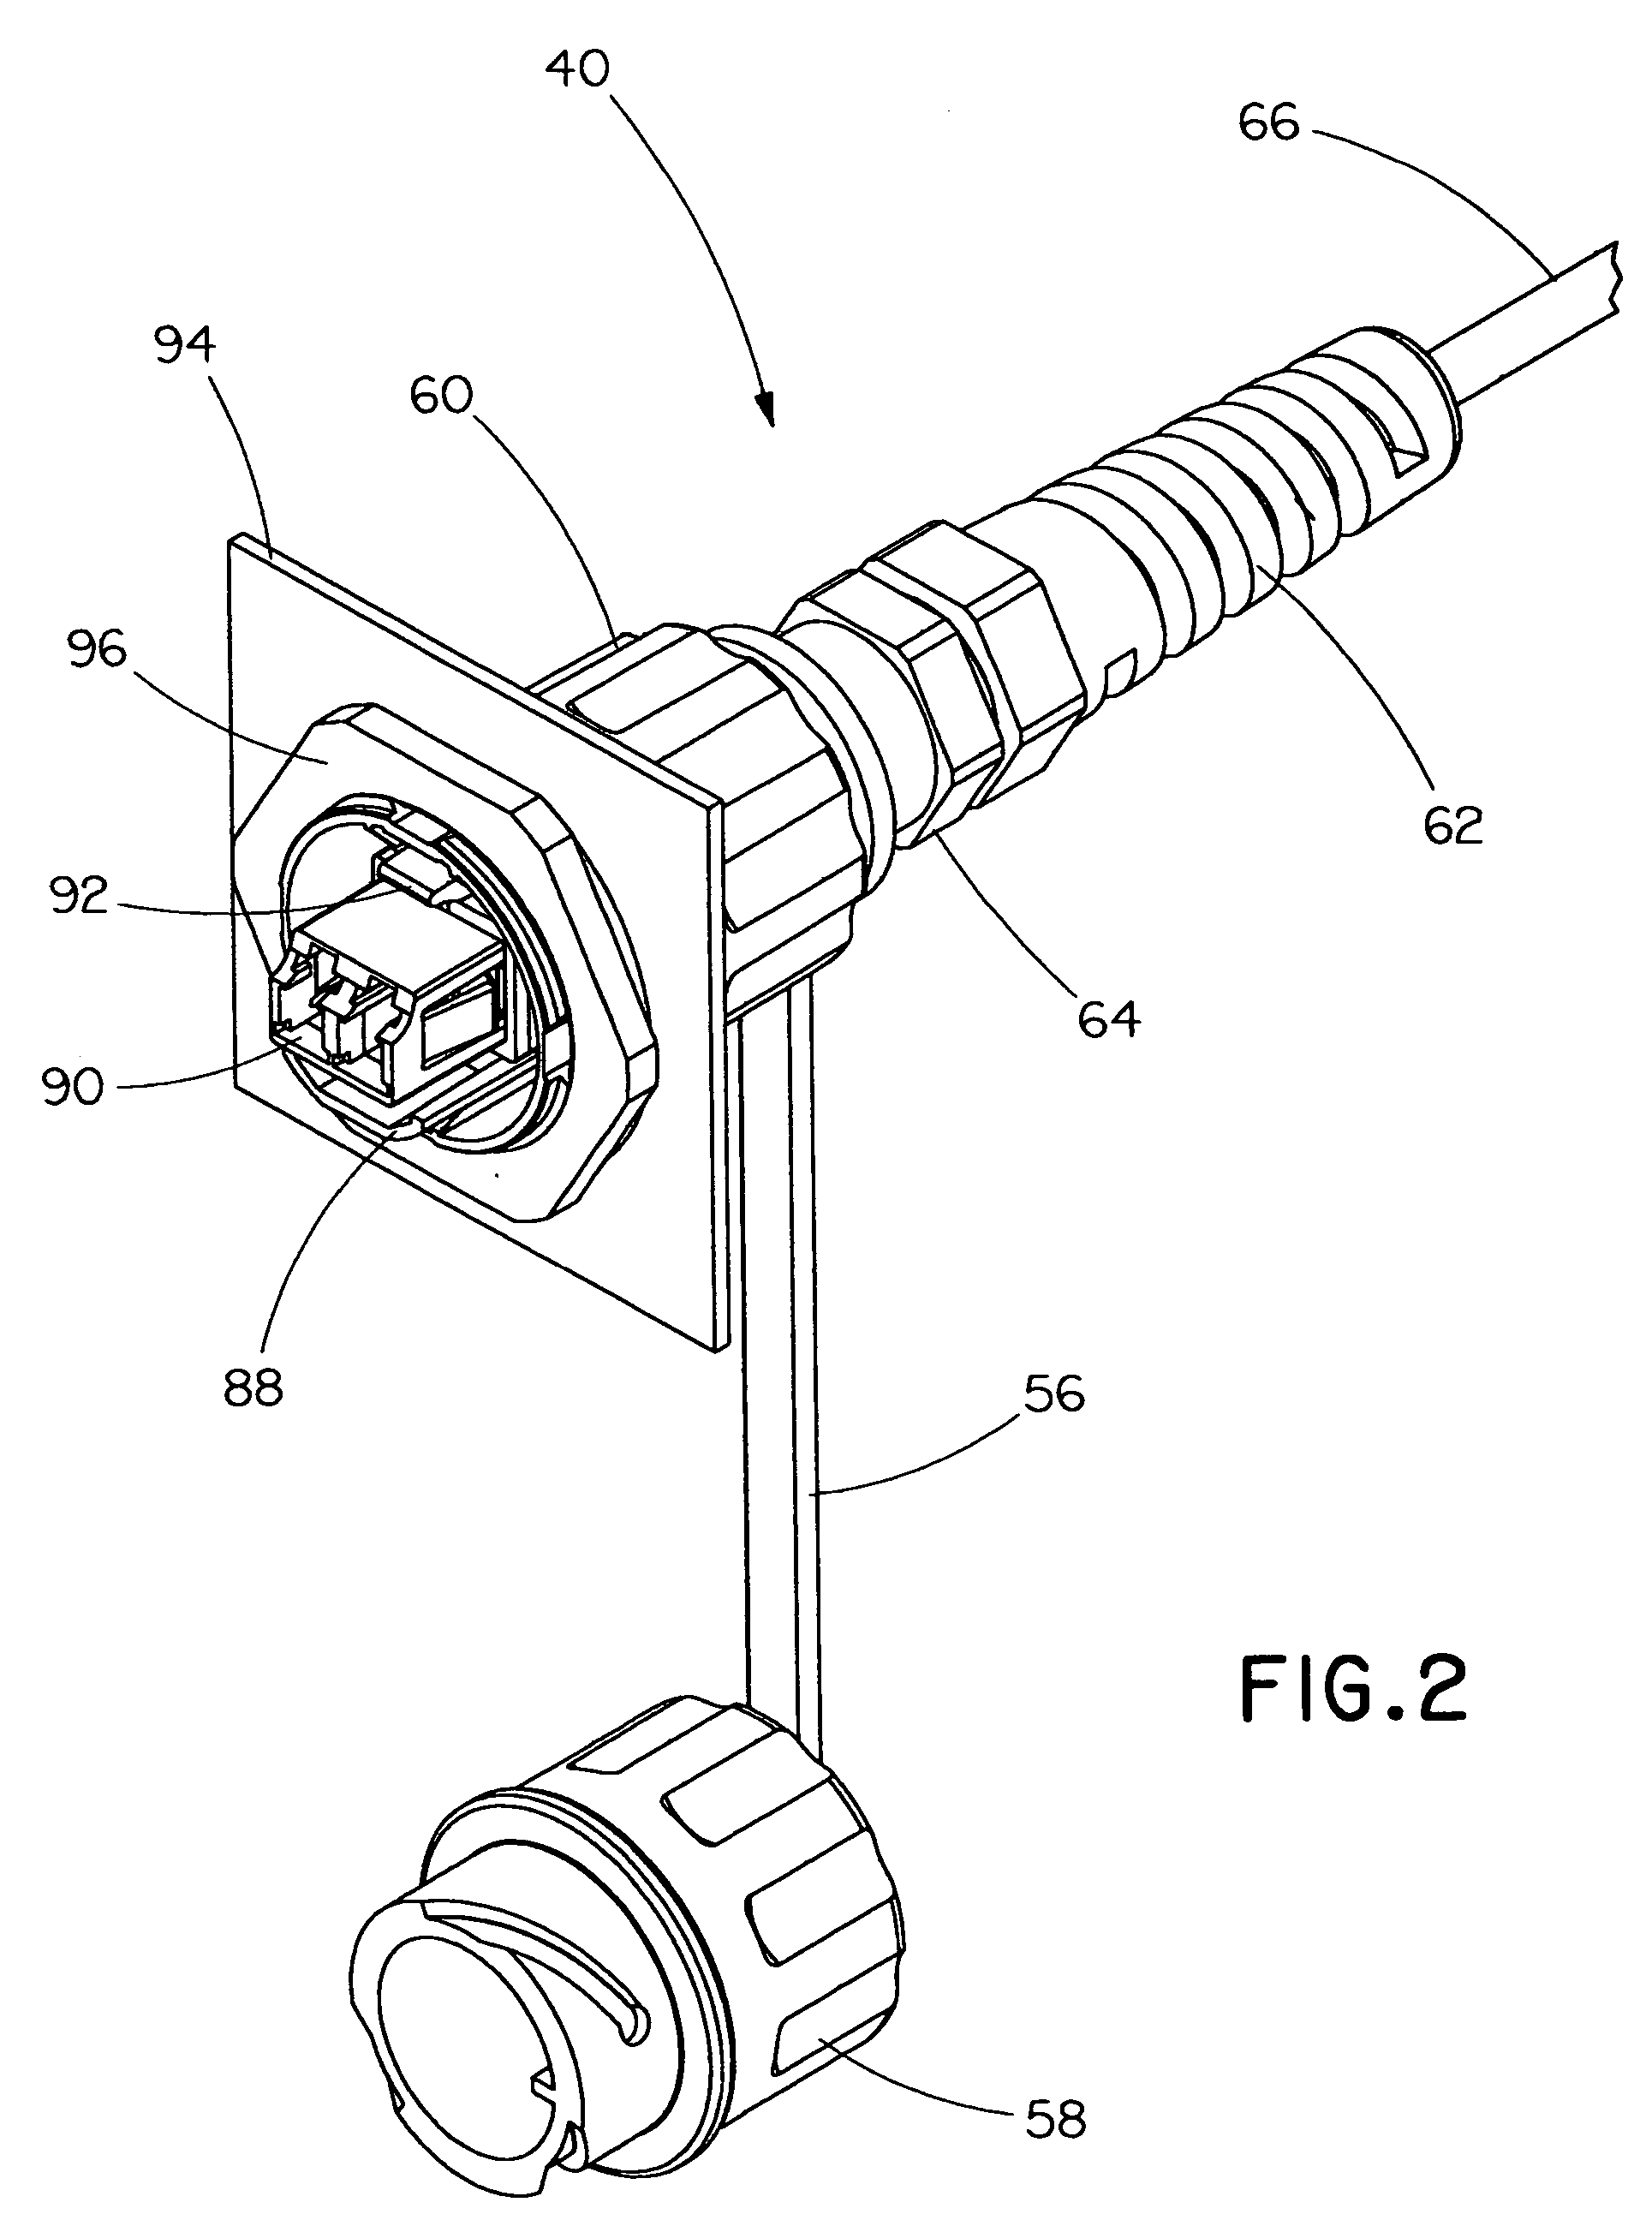 Fiber optic industrial connector